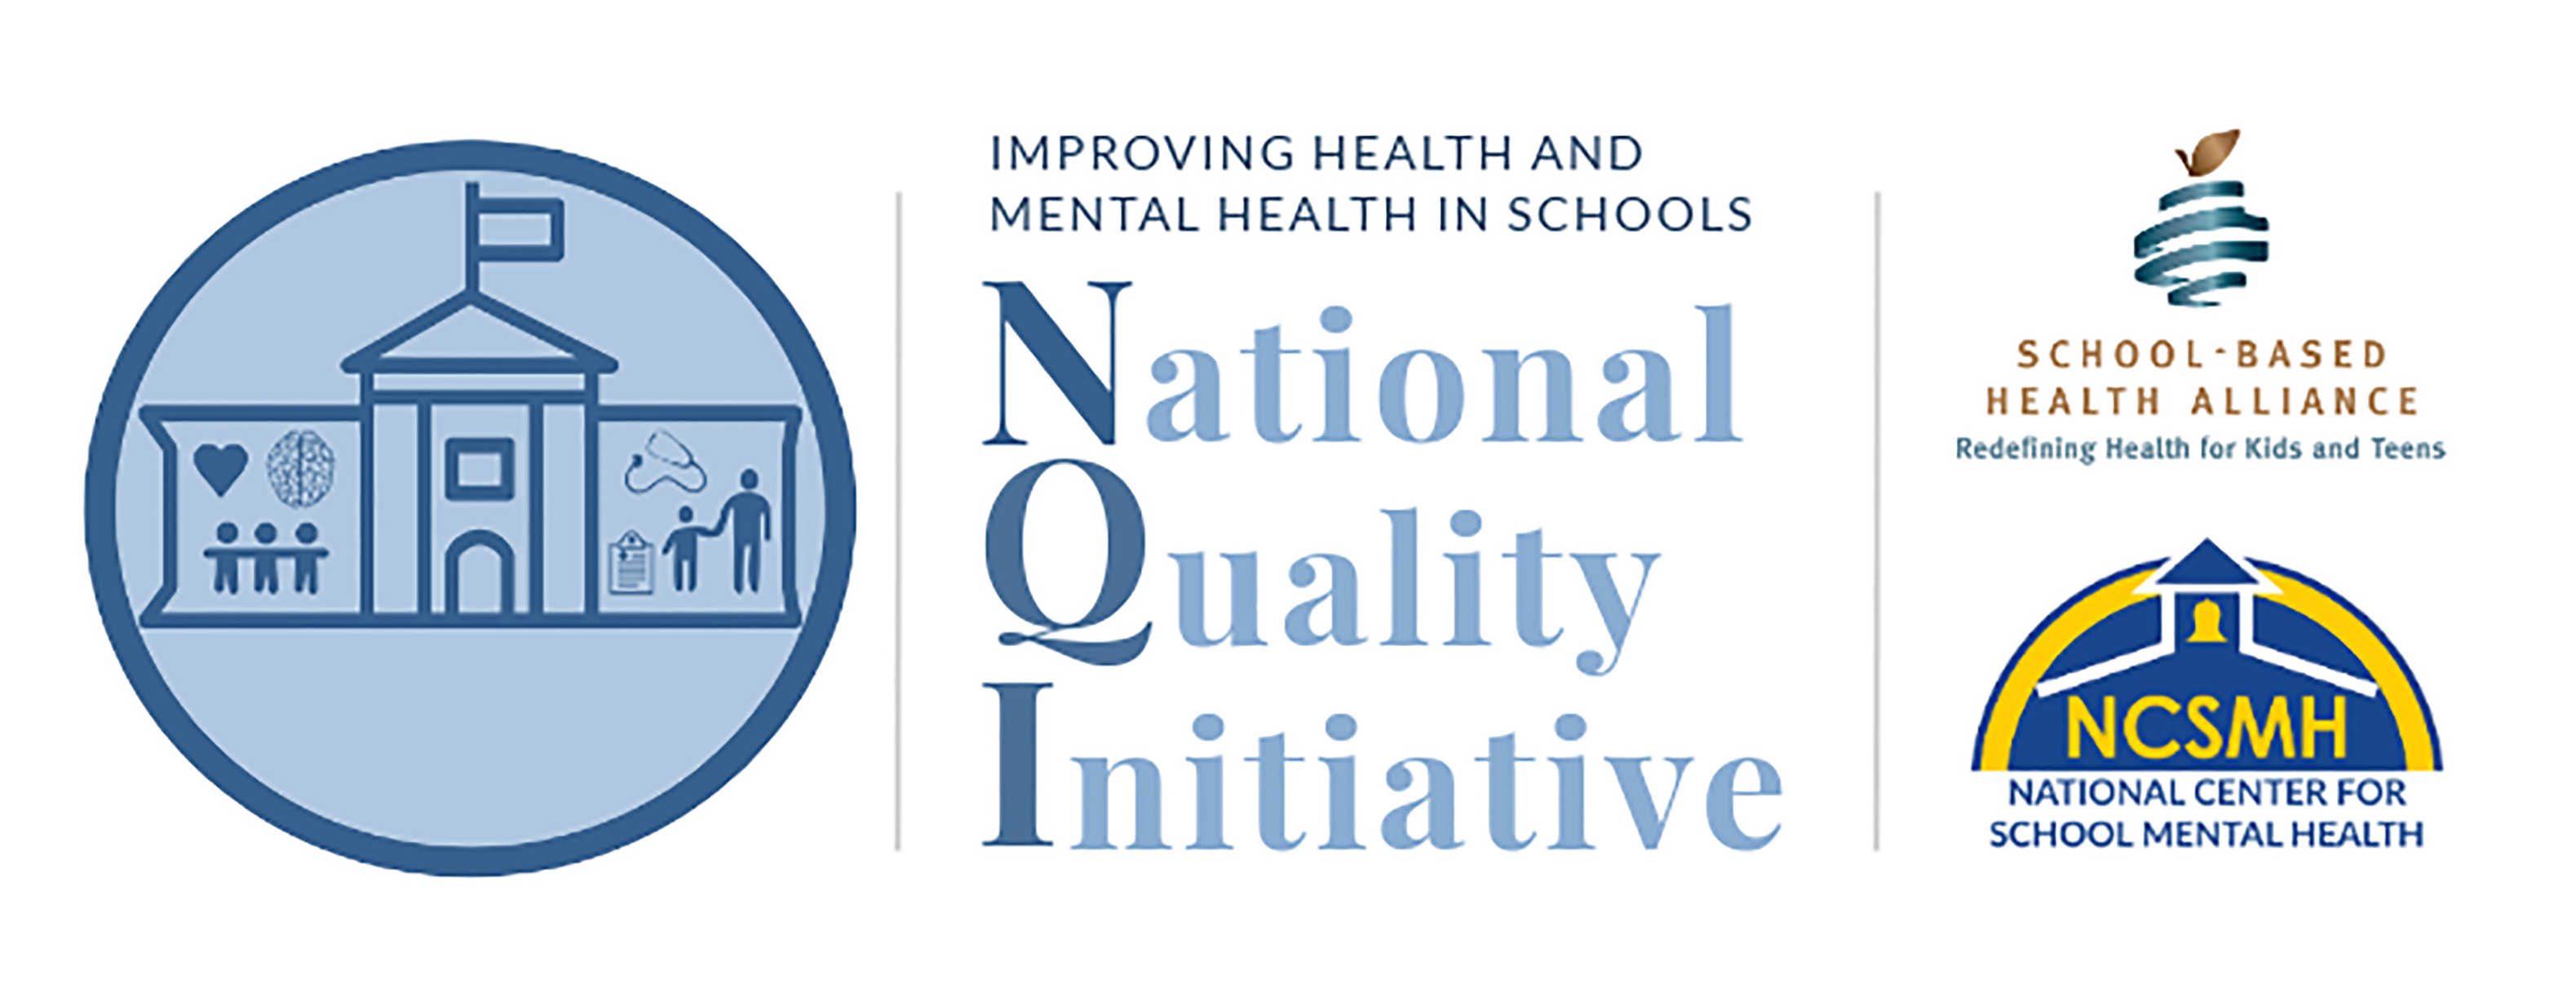 National Center for School Mental Health logo